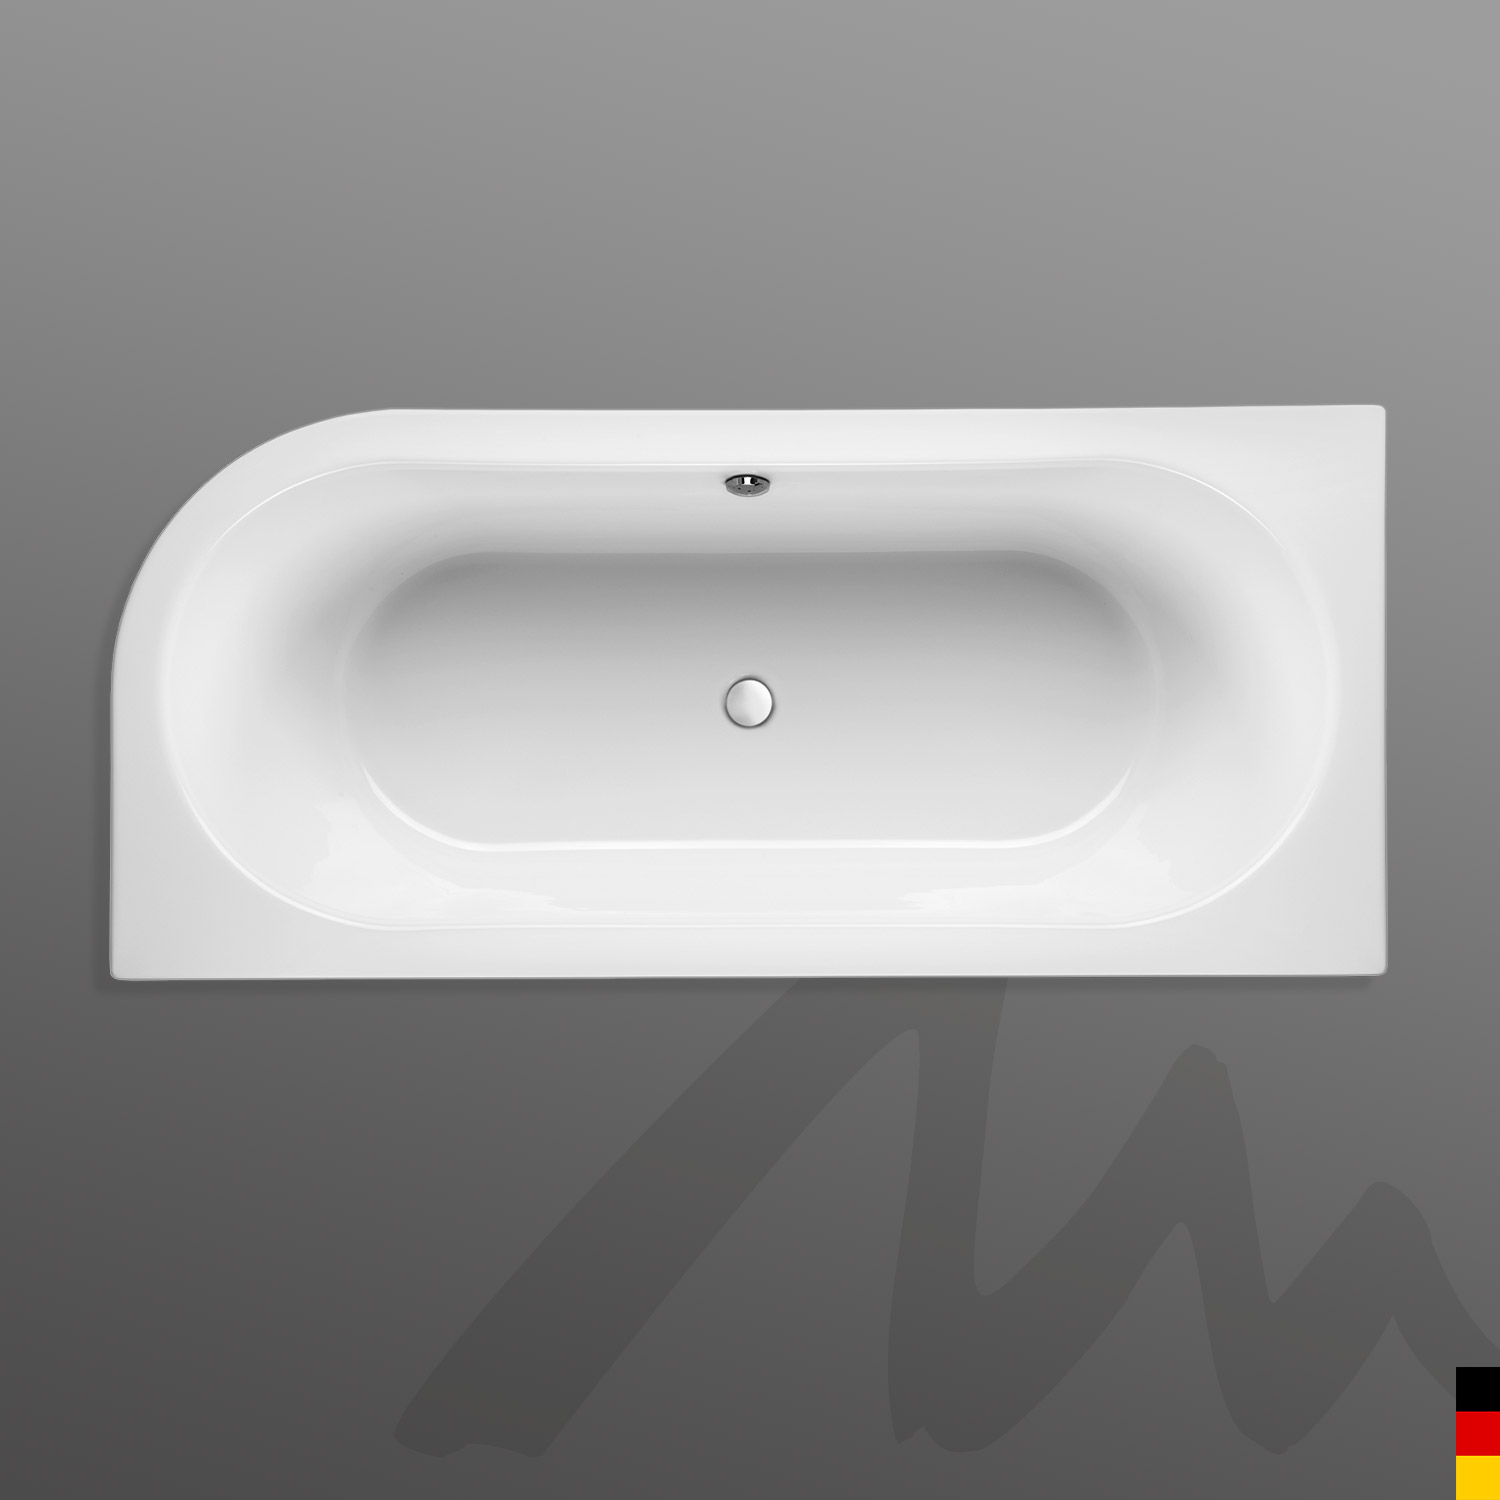 Mauersberger Badewanne Oval Primo 1 - 170/75 duo  Ausführung links  170x75x44  Farbe:rein-weiß